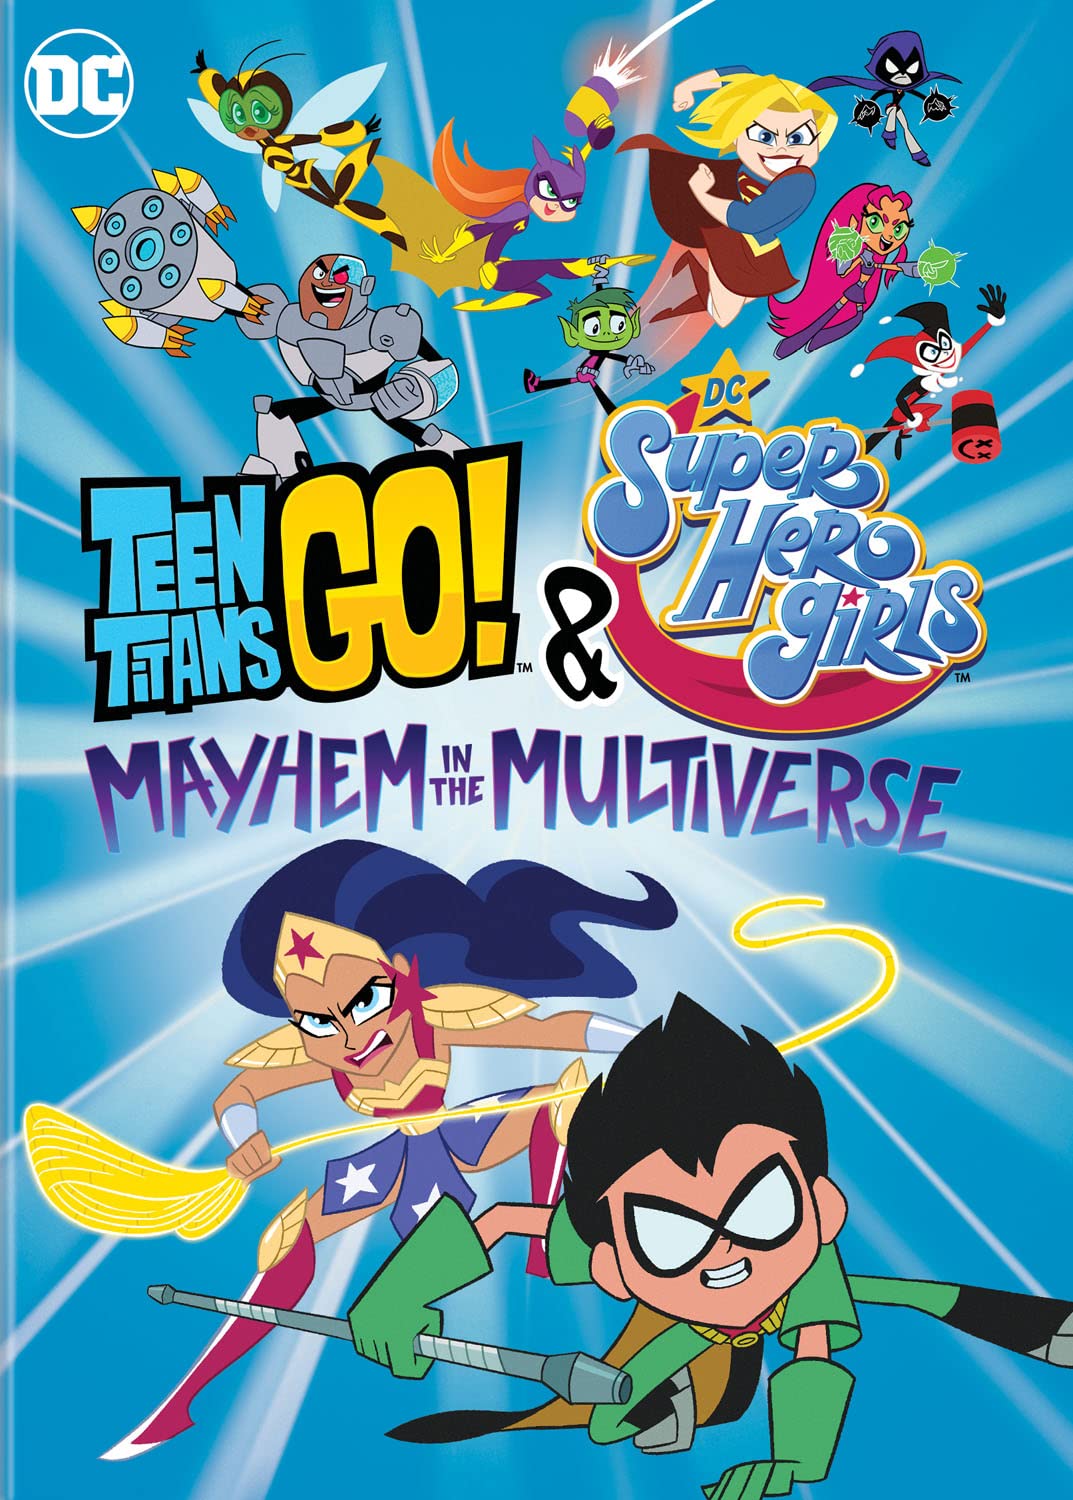 Teen Titans Go & DC Super Hero Girls' Bumblebee Teases a More